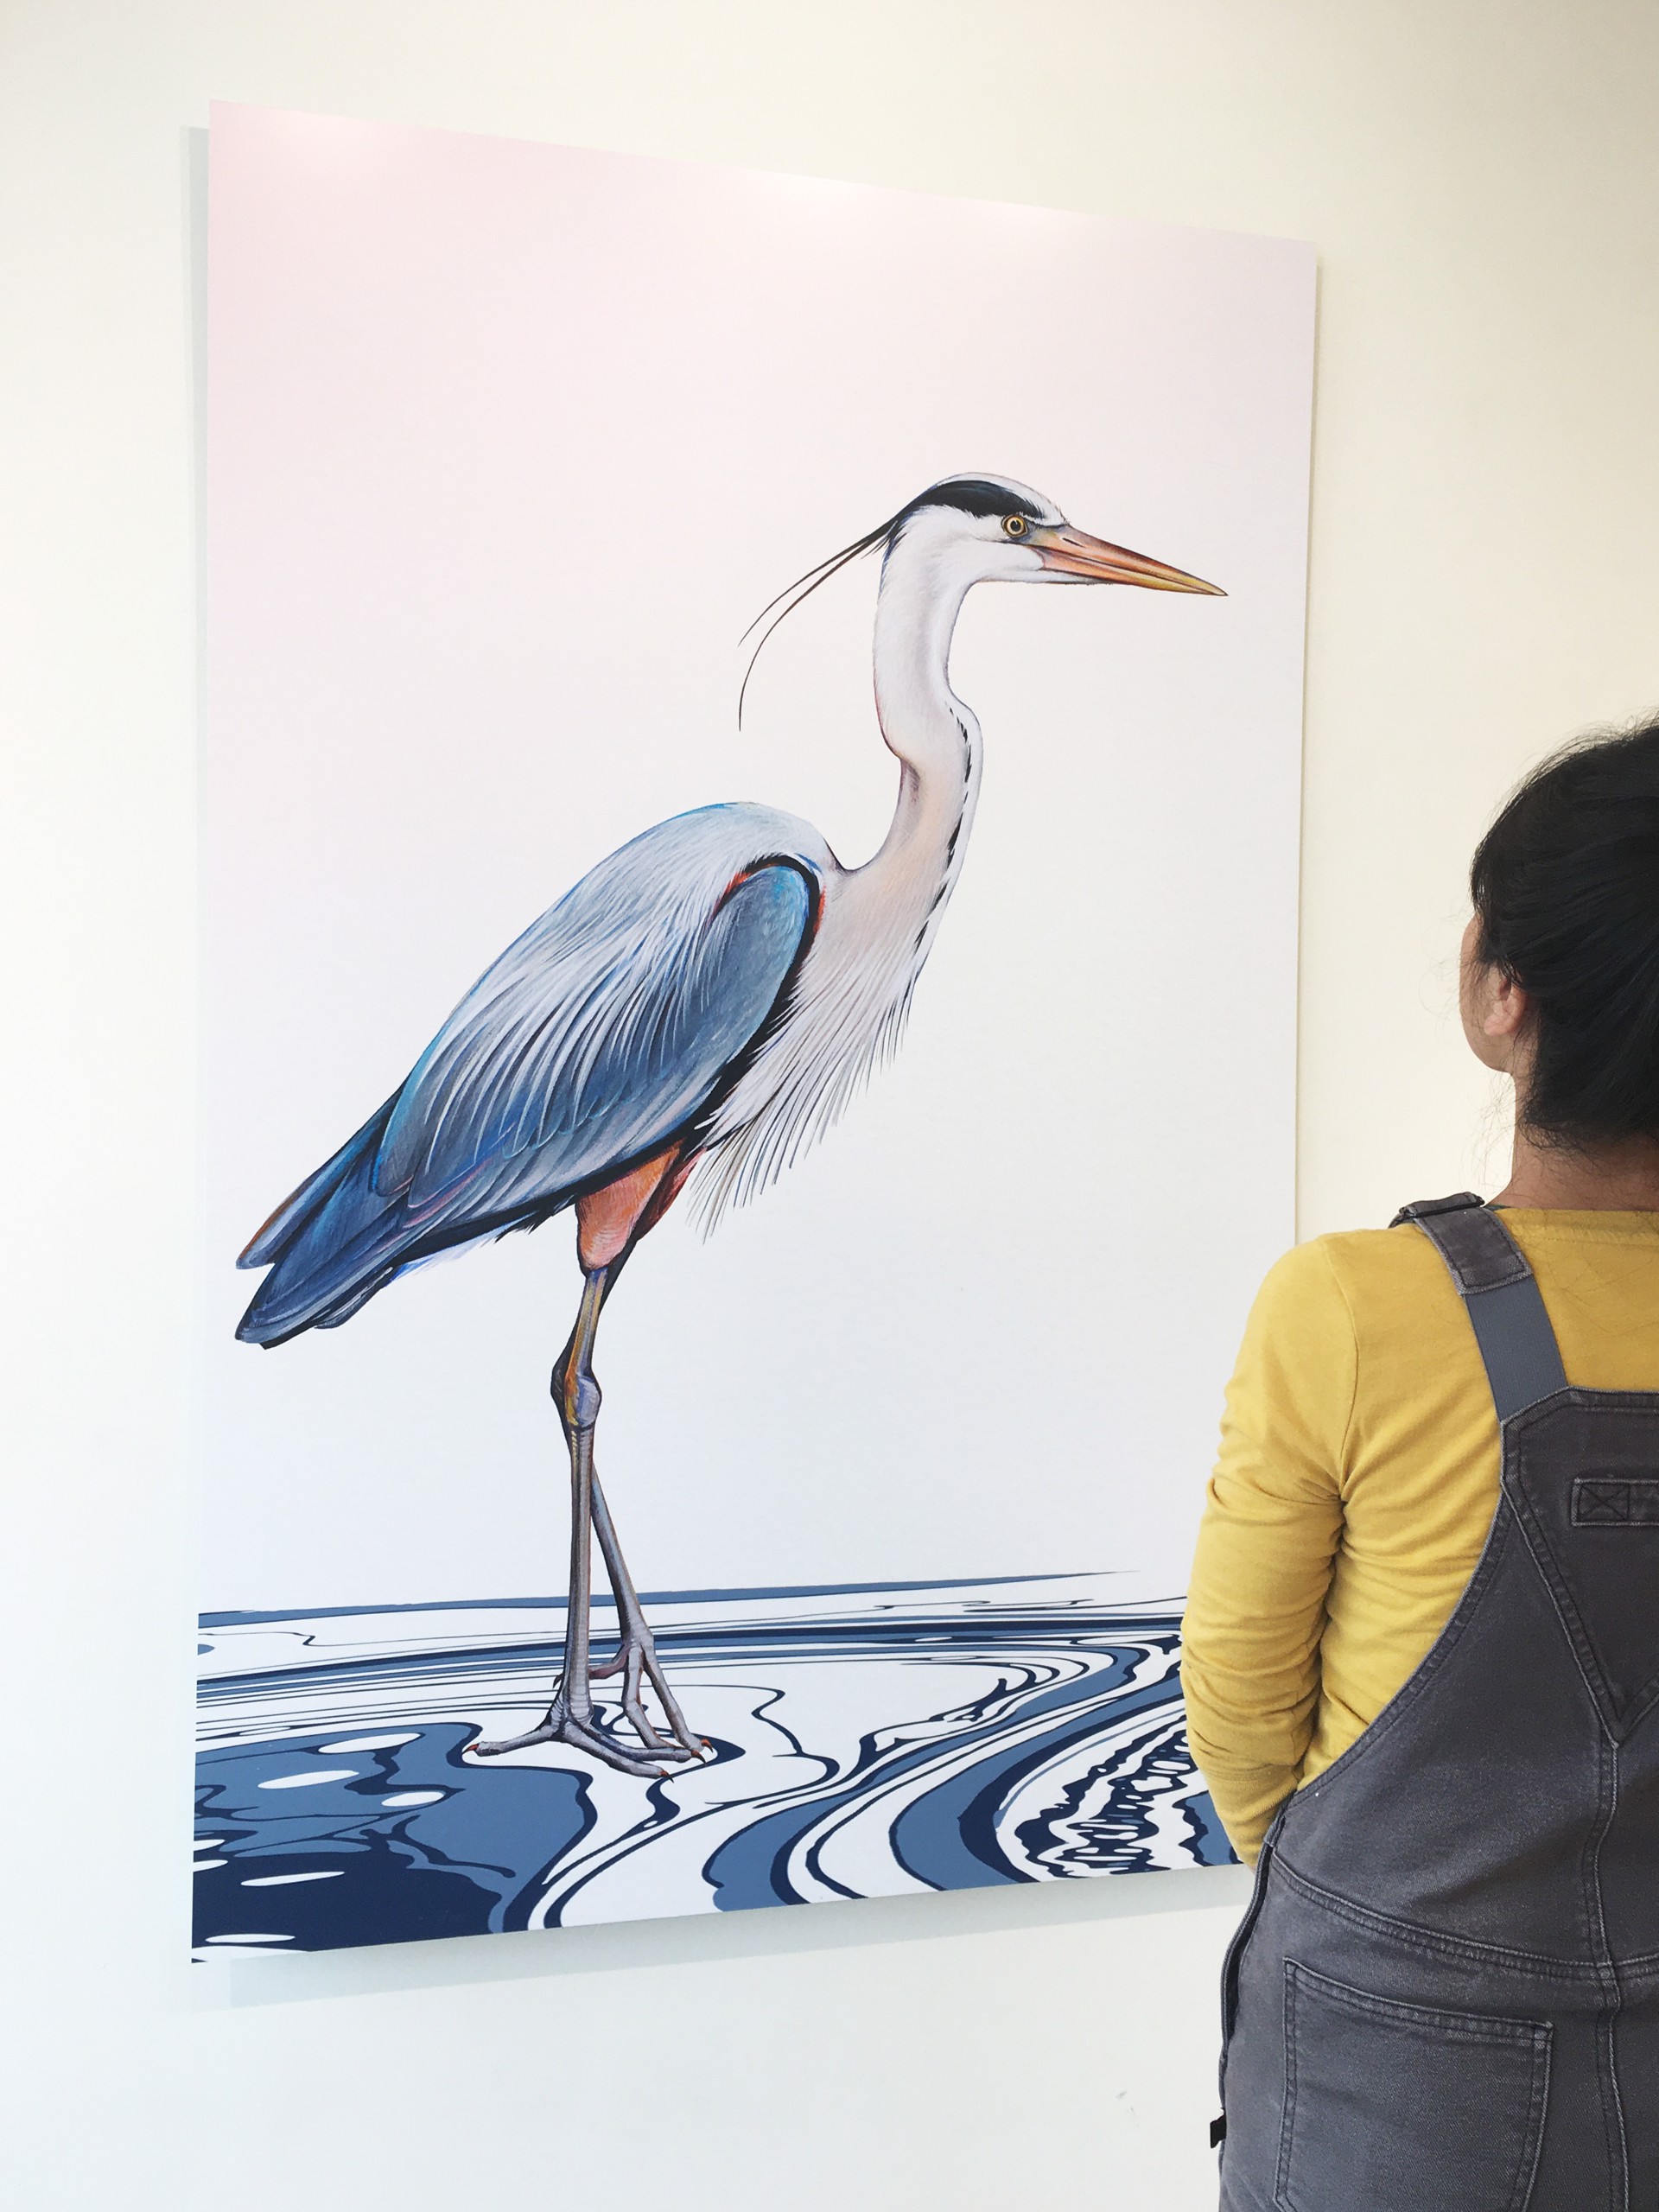 Great Blue Heron by Jane Kim